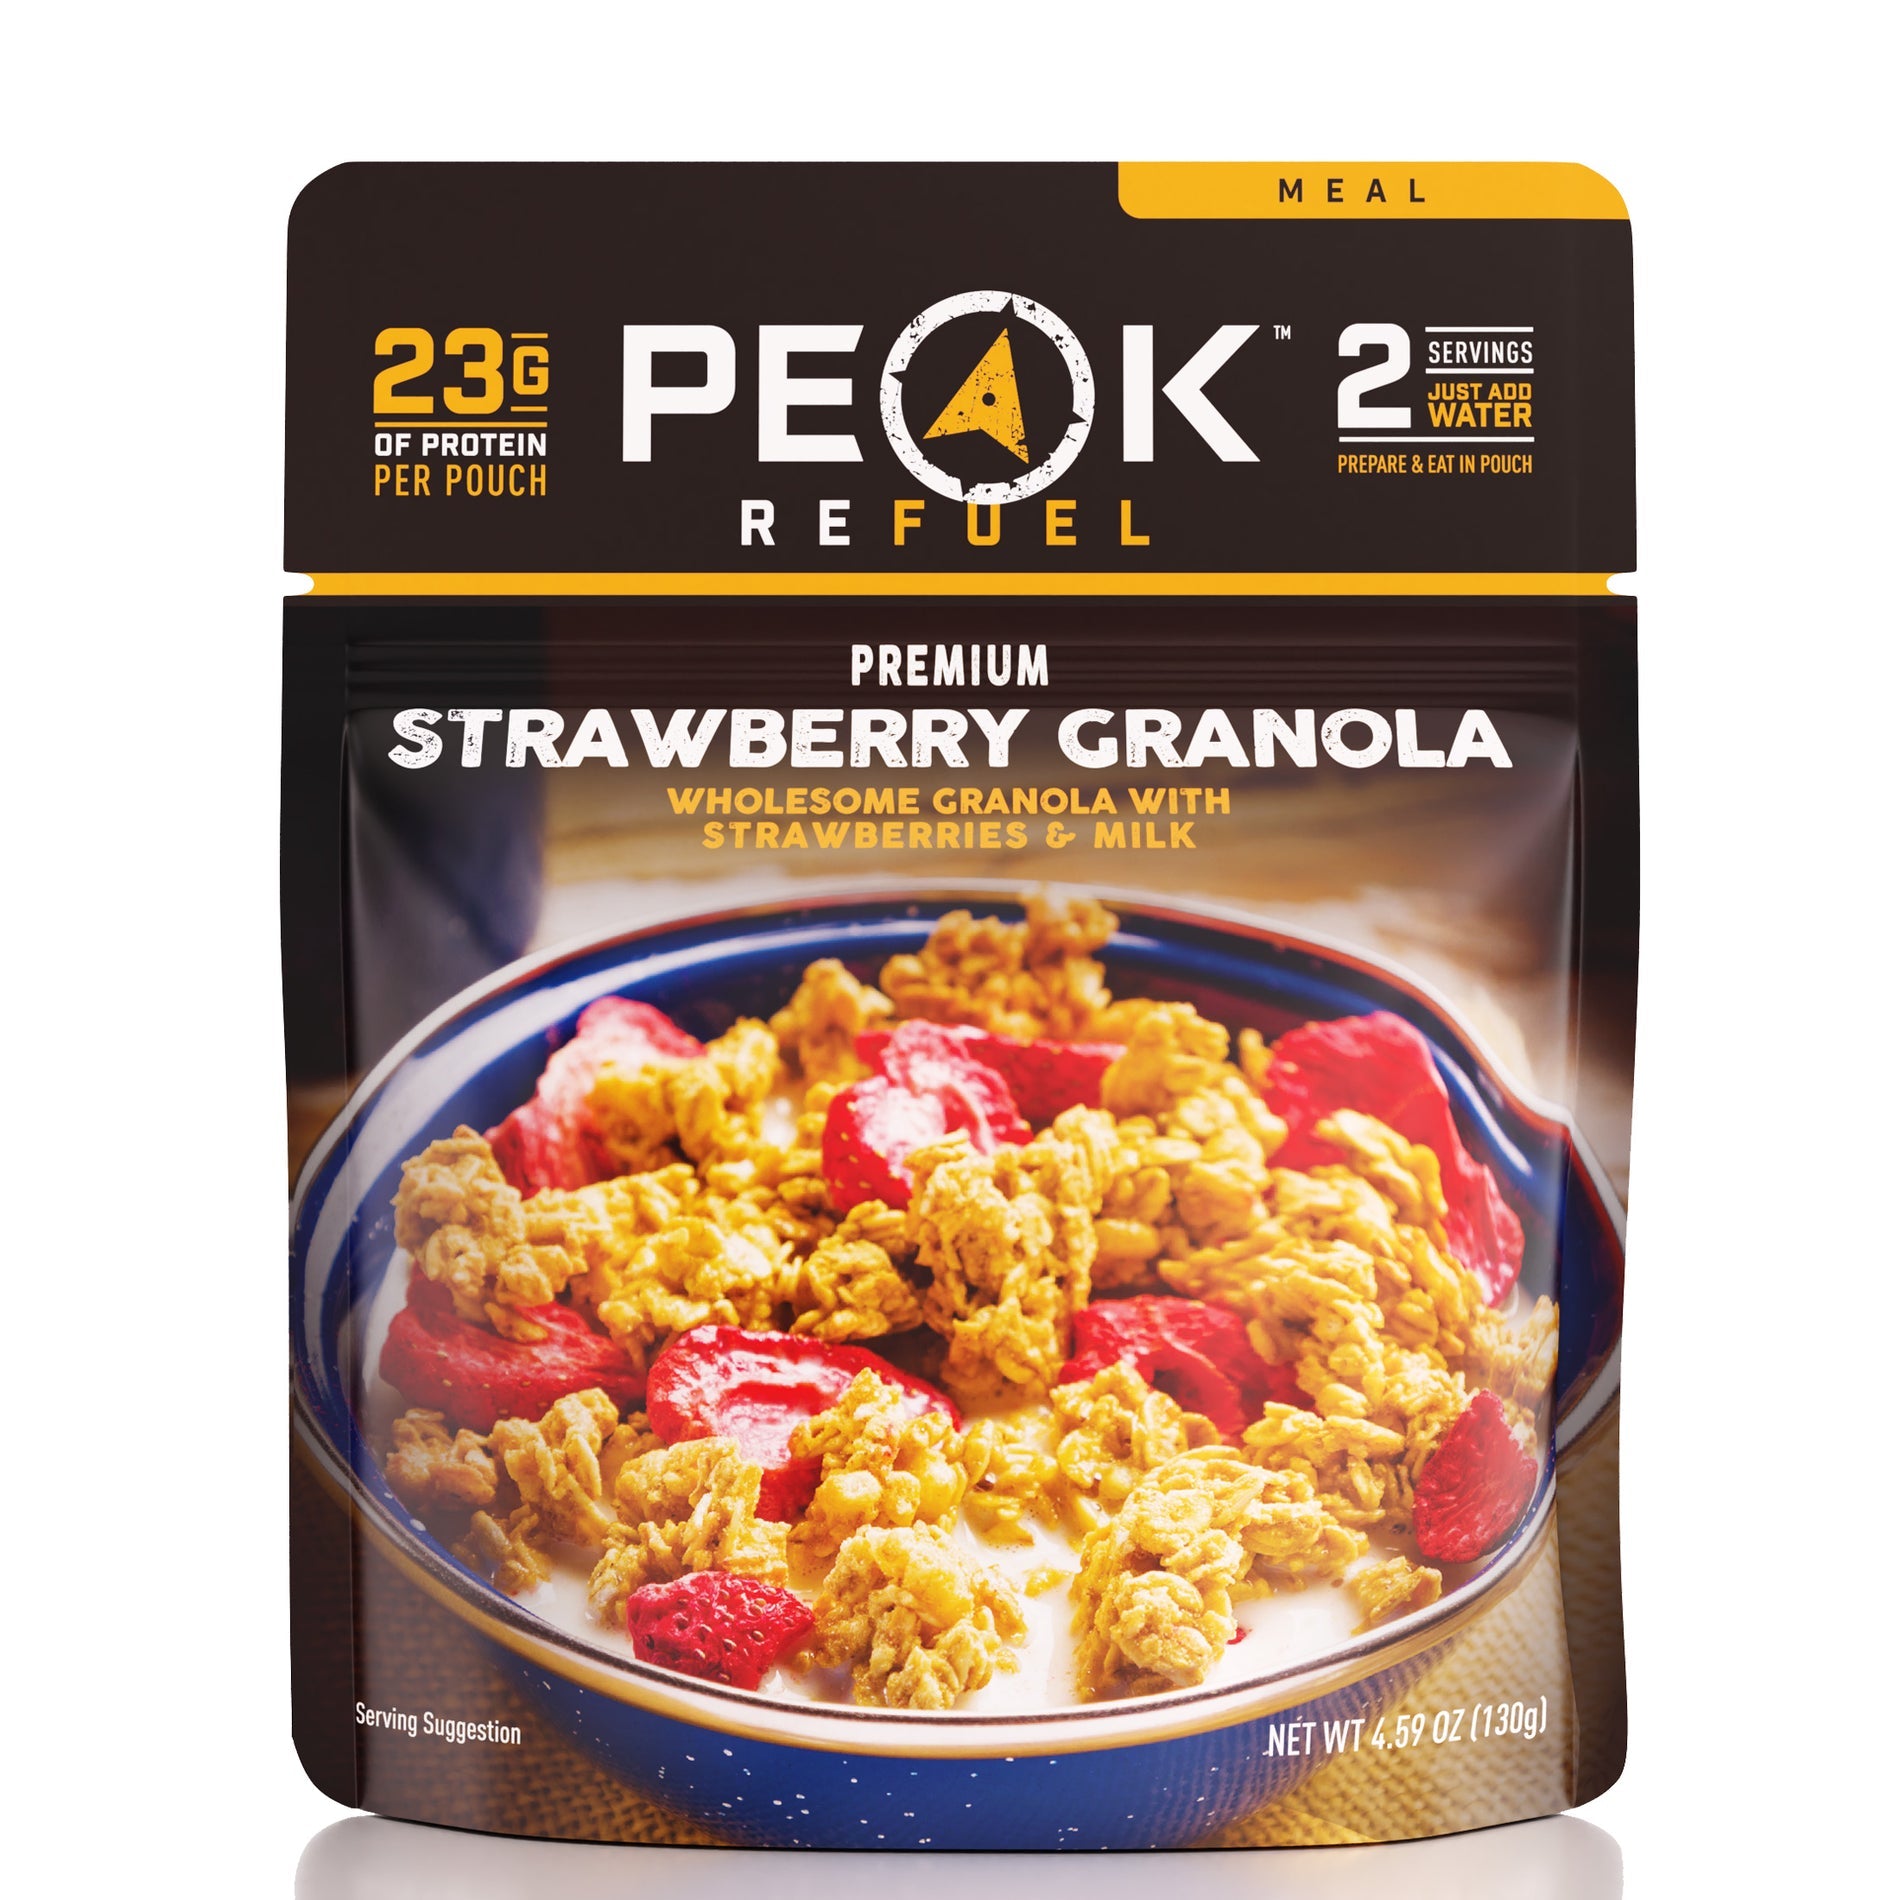 Peak Refuel: Strawberry Granola